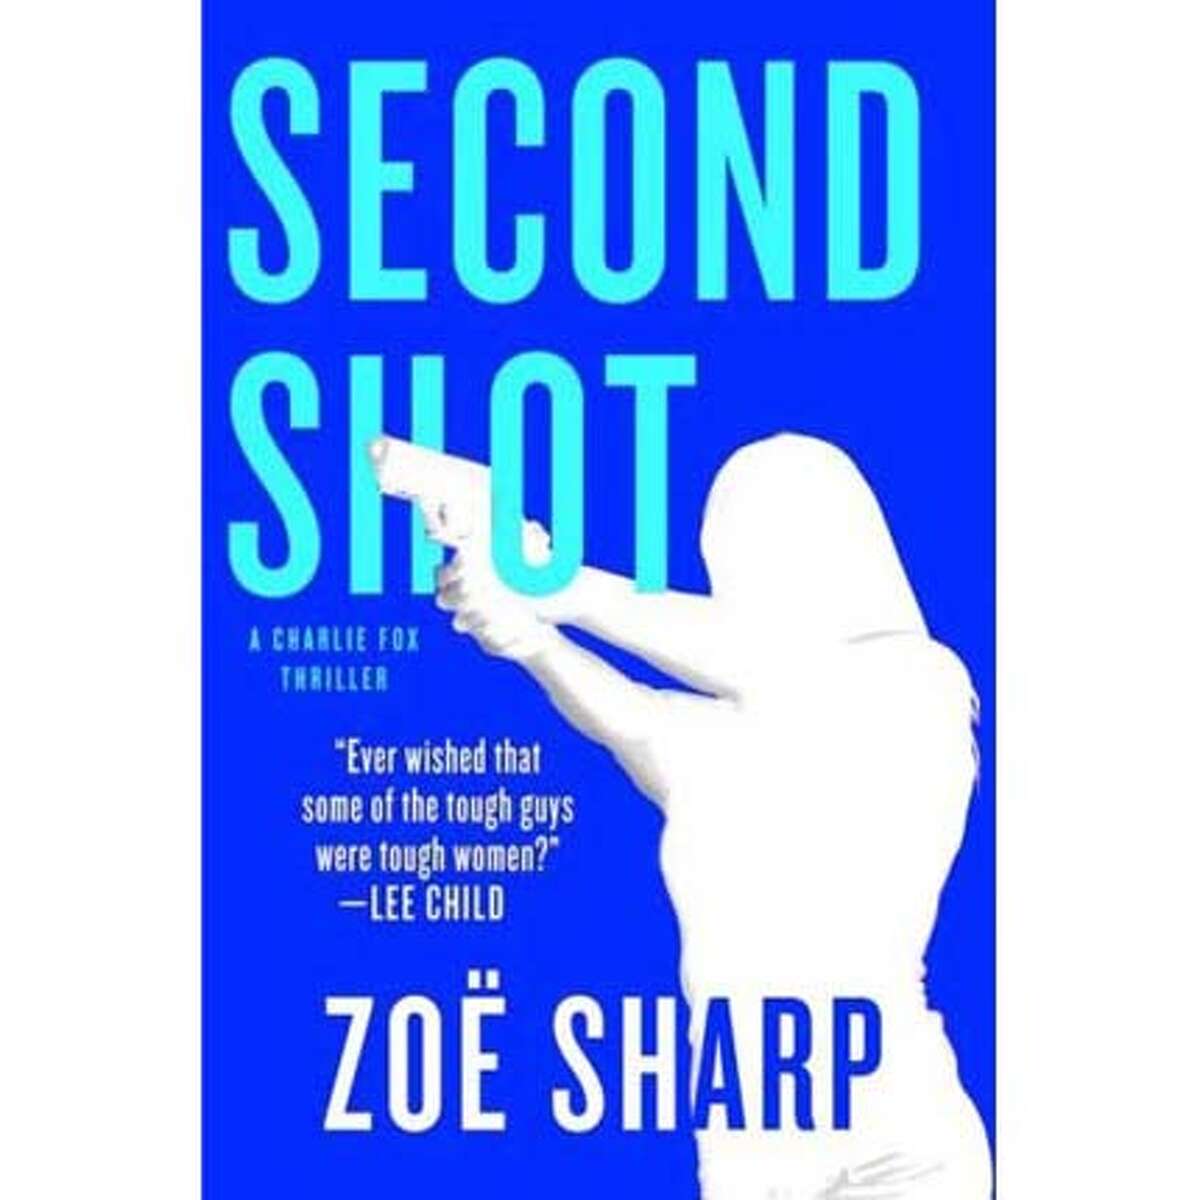 "Second Shot" by Zoe Sharp